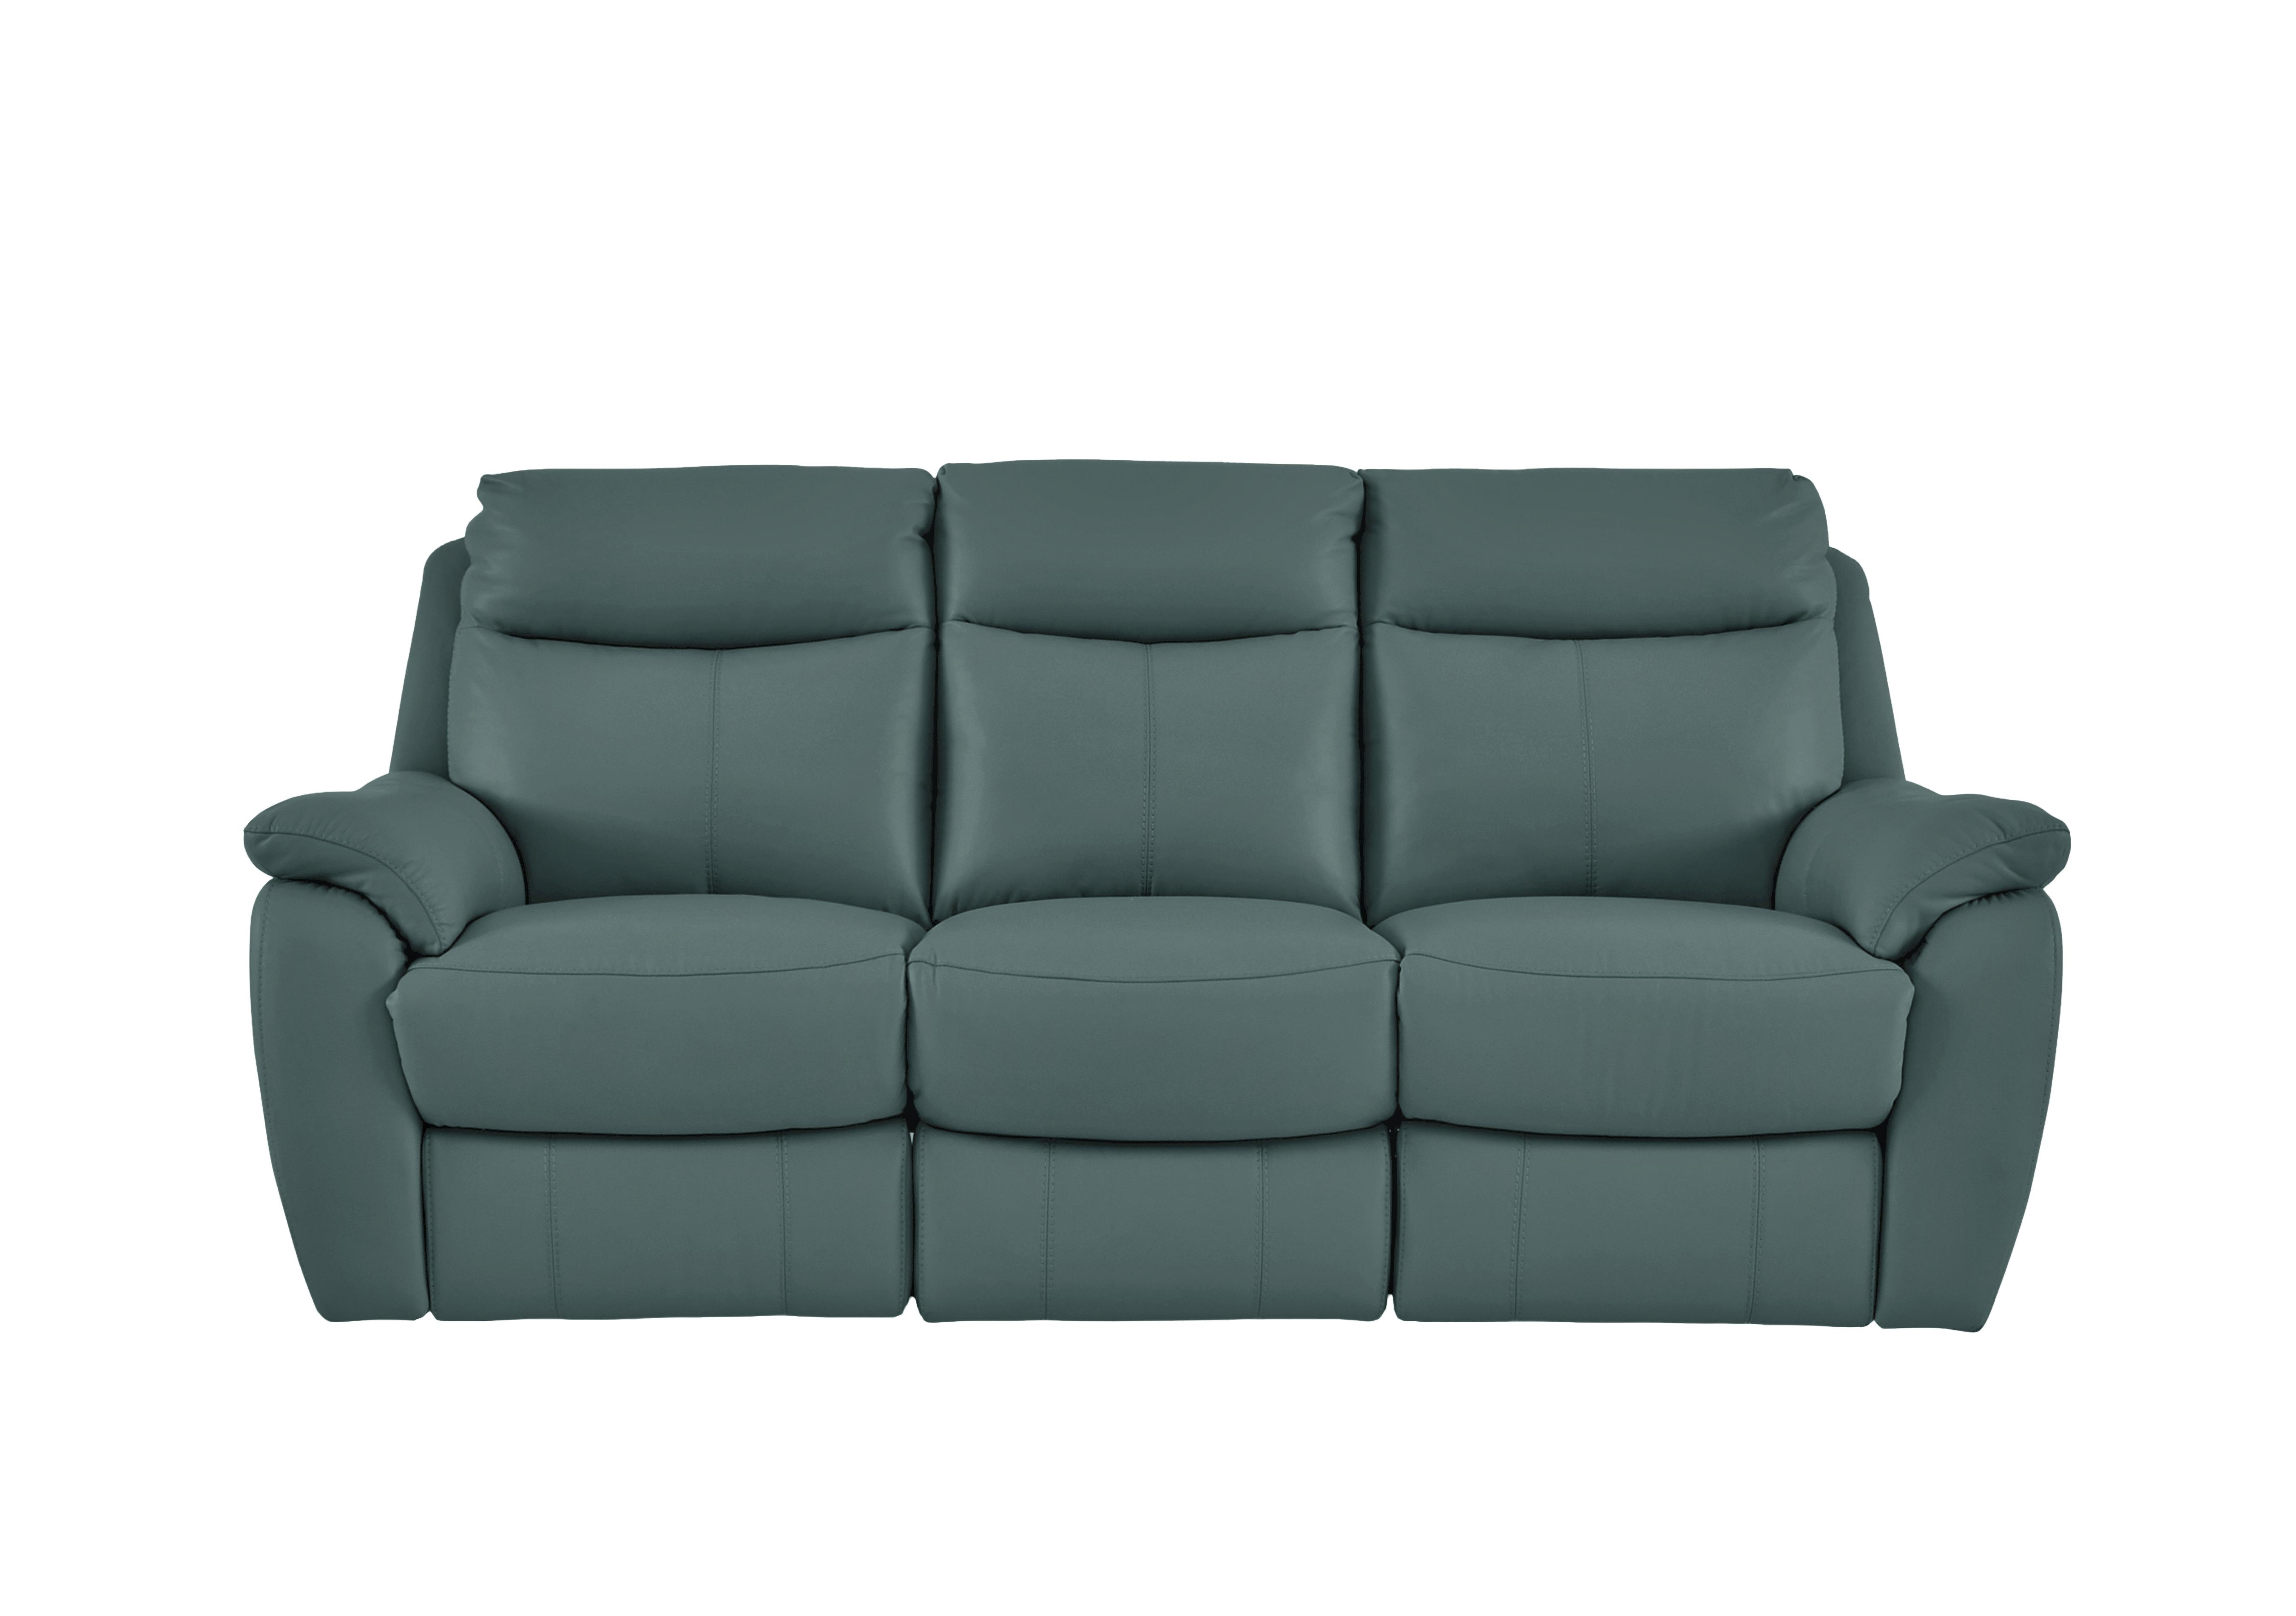 Snug 3 Seater Leather Sofa in Bv-301e Lake Green on Furniture Village